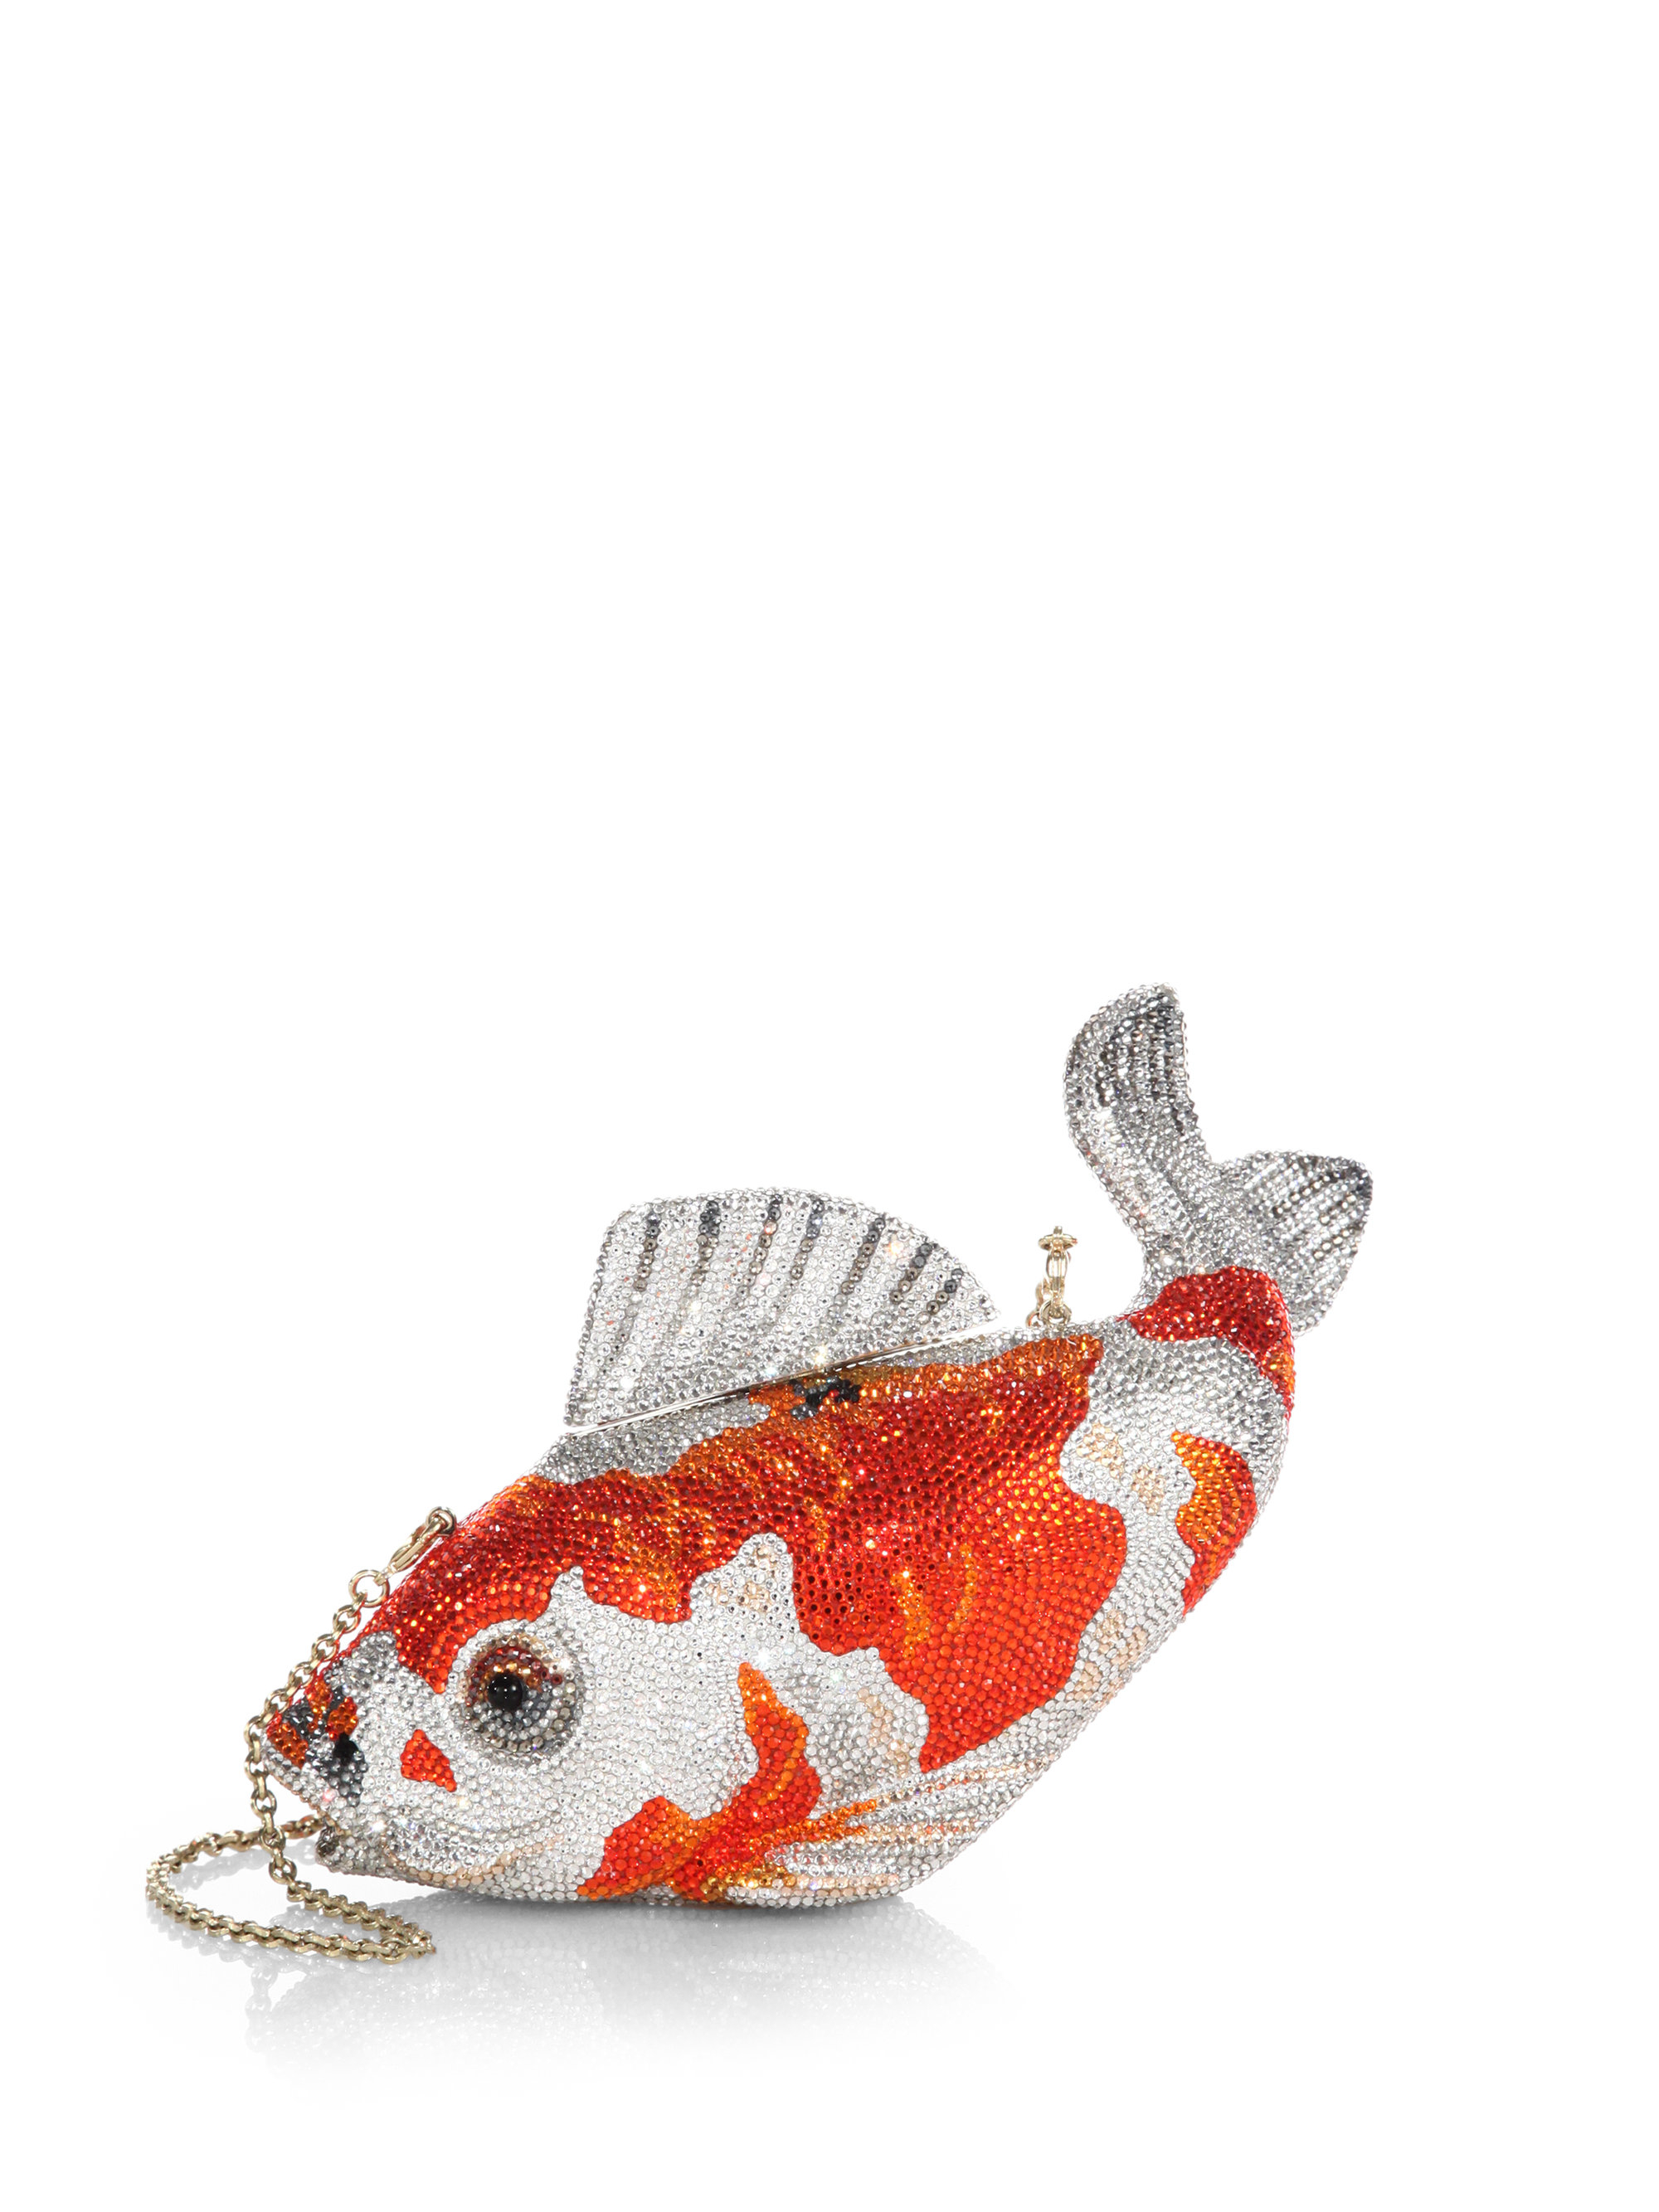 Judith Leiber Koi Fish Swarovski-Crystal Clutch in Orange-Silver (Orange) |  Lyst